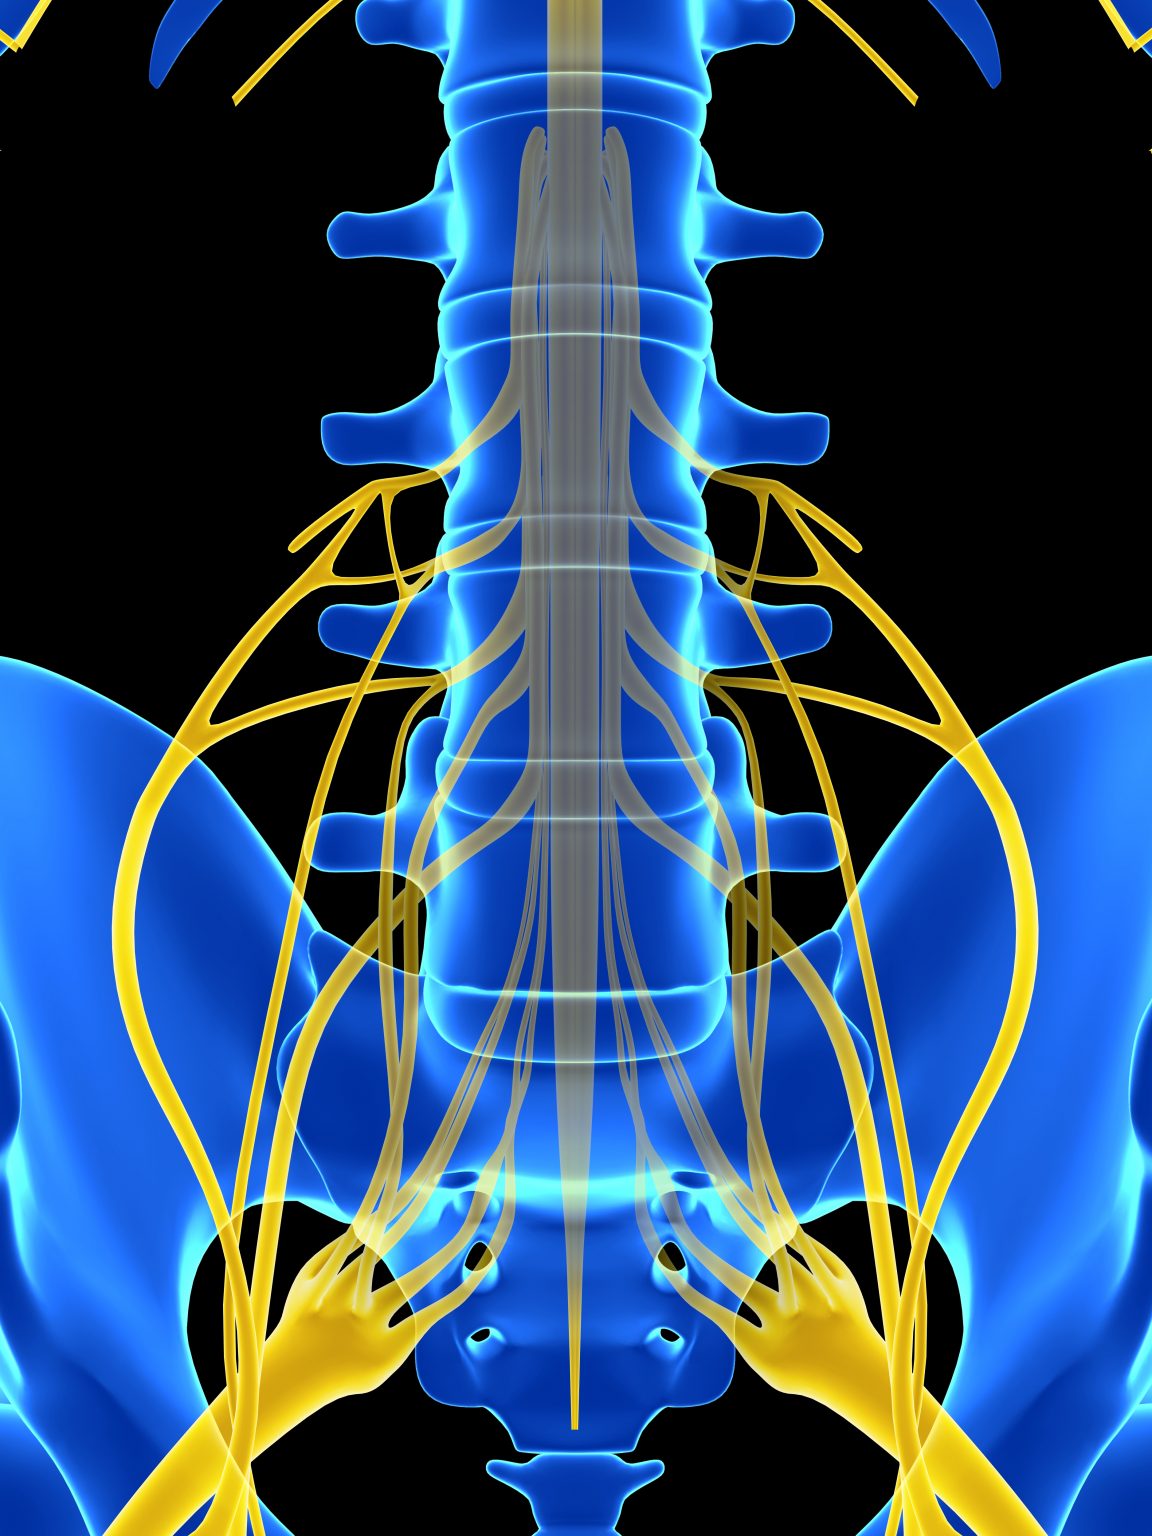 spinal stimulator dorsal column myelopathy causing